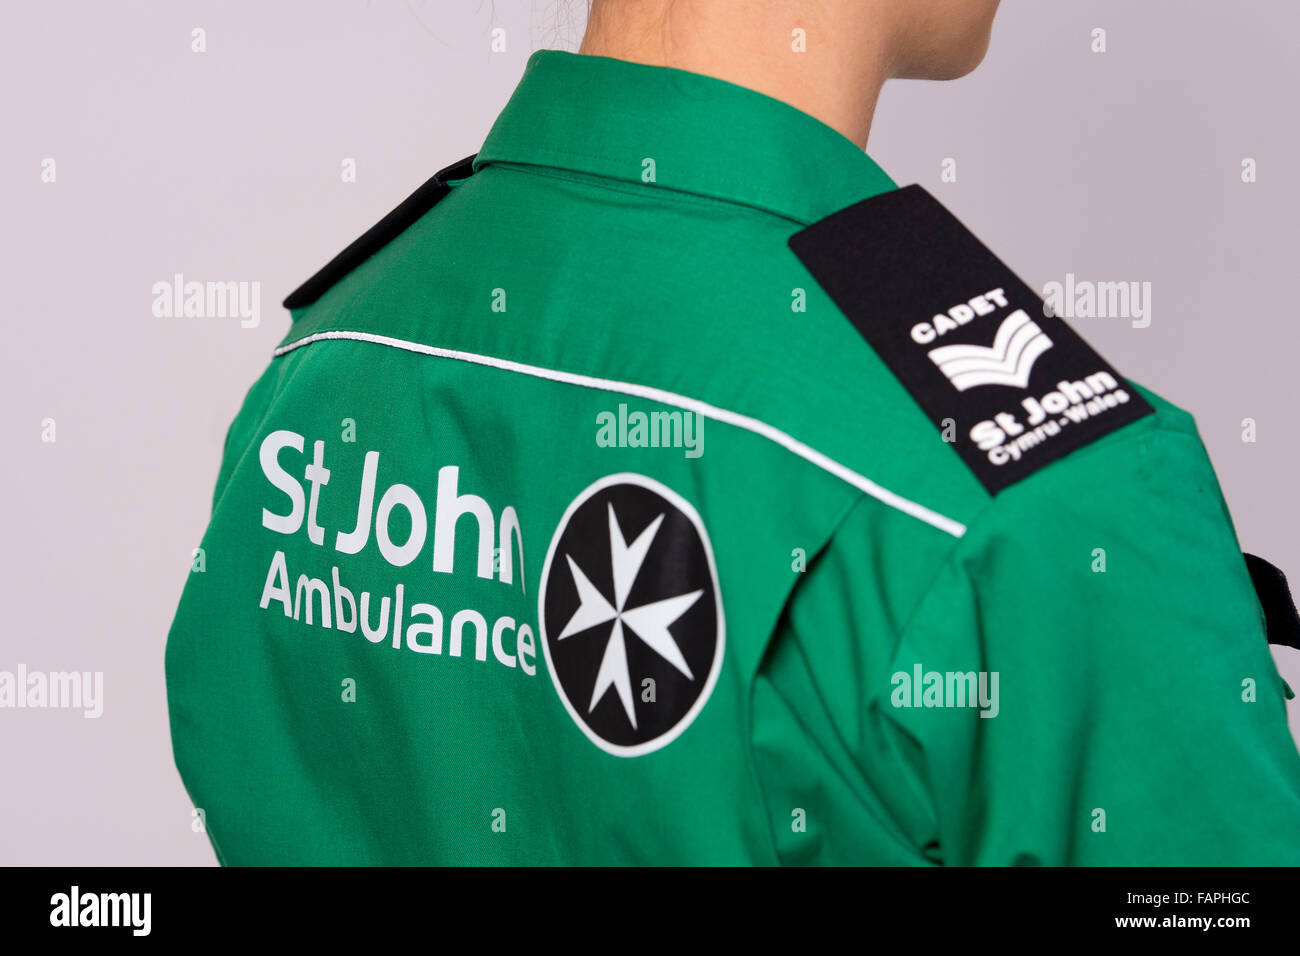 St John Ambulance Uniform | vlr.eng.br